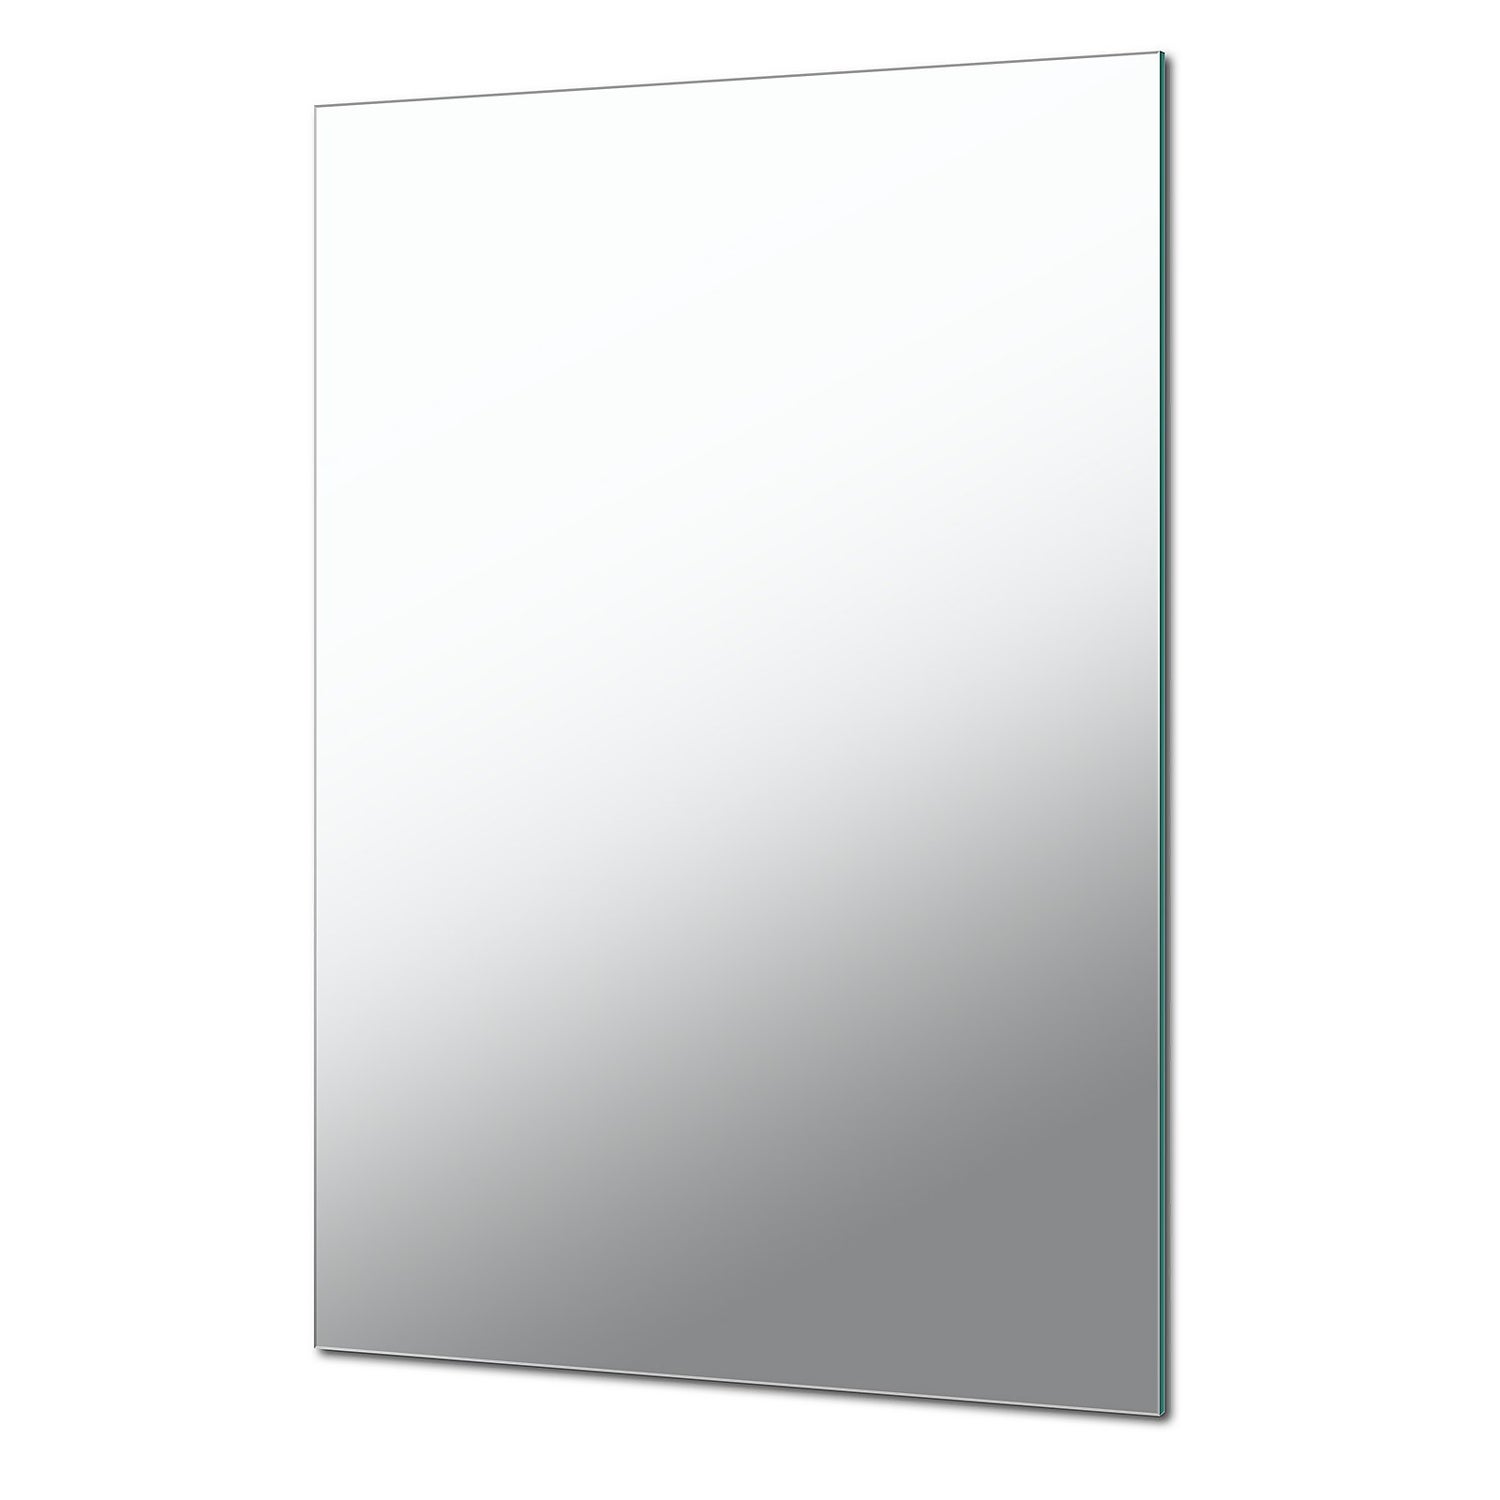 Rectangular Wall Mounted Bathroom Mirror - 50 x 70cm